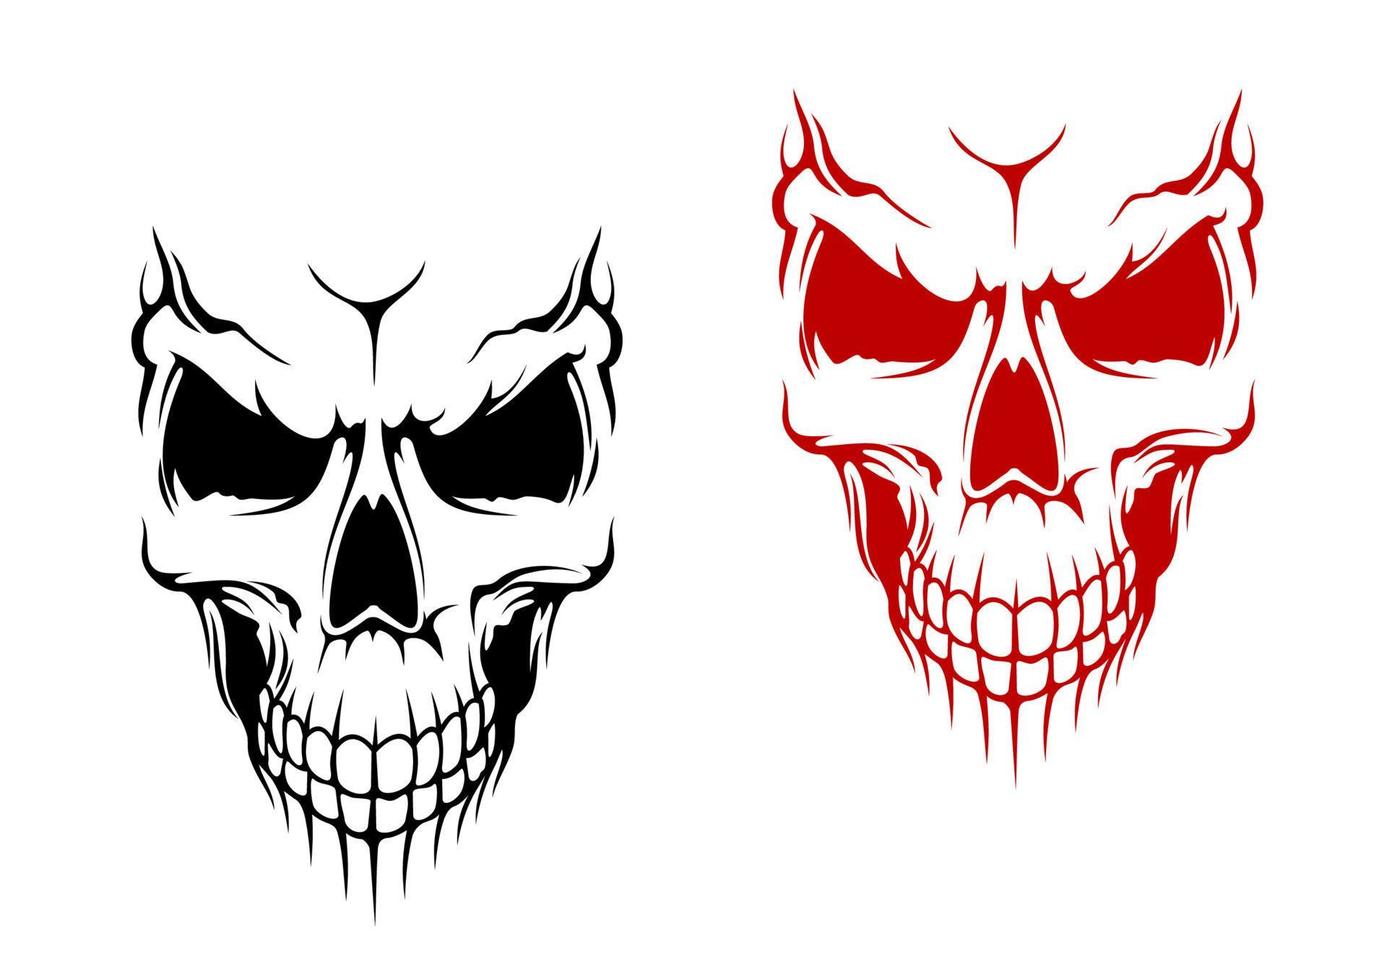 Smiling skull character vector